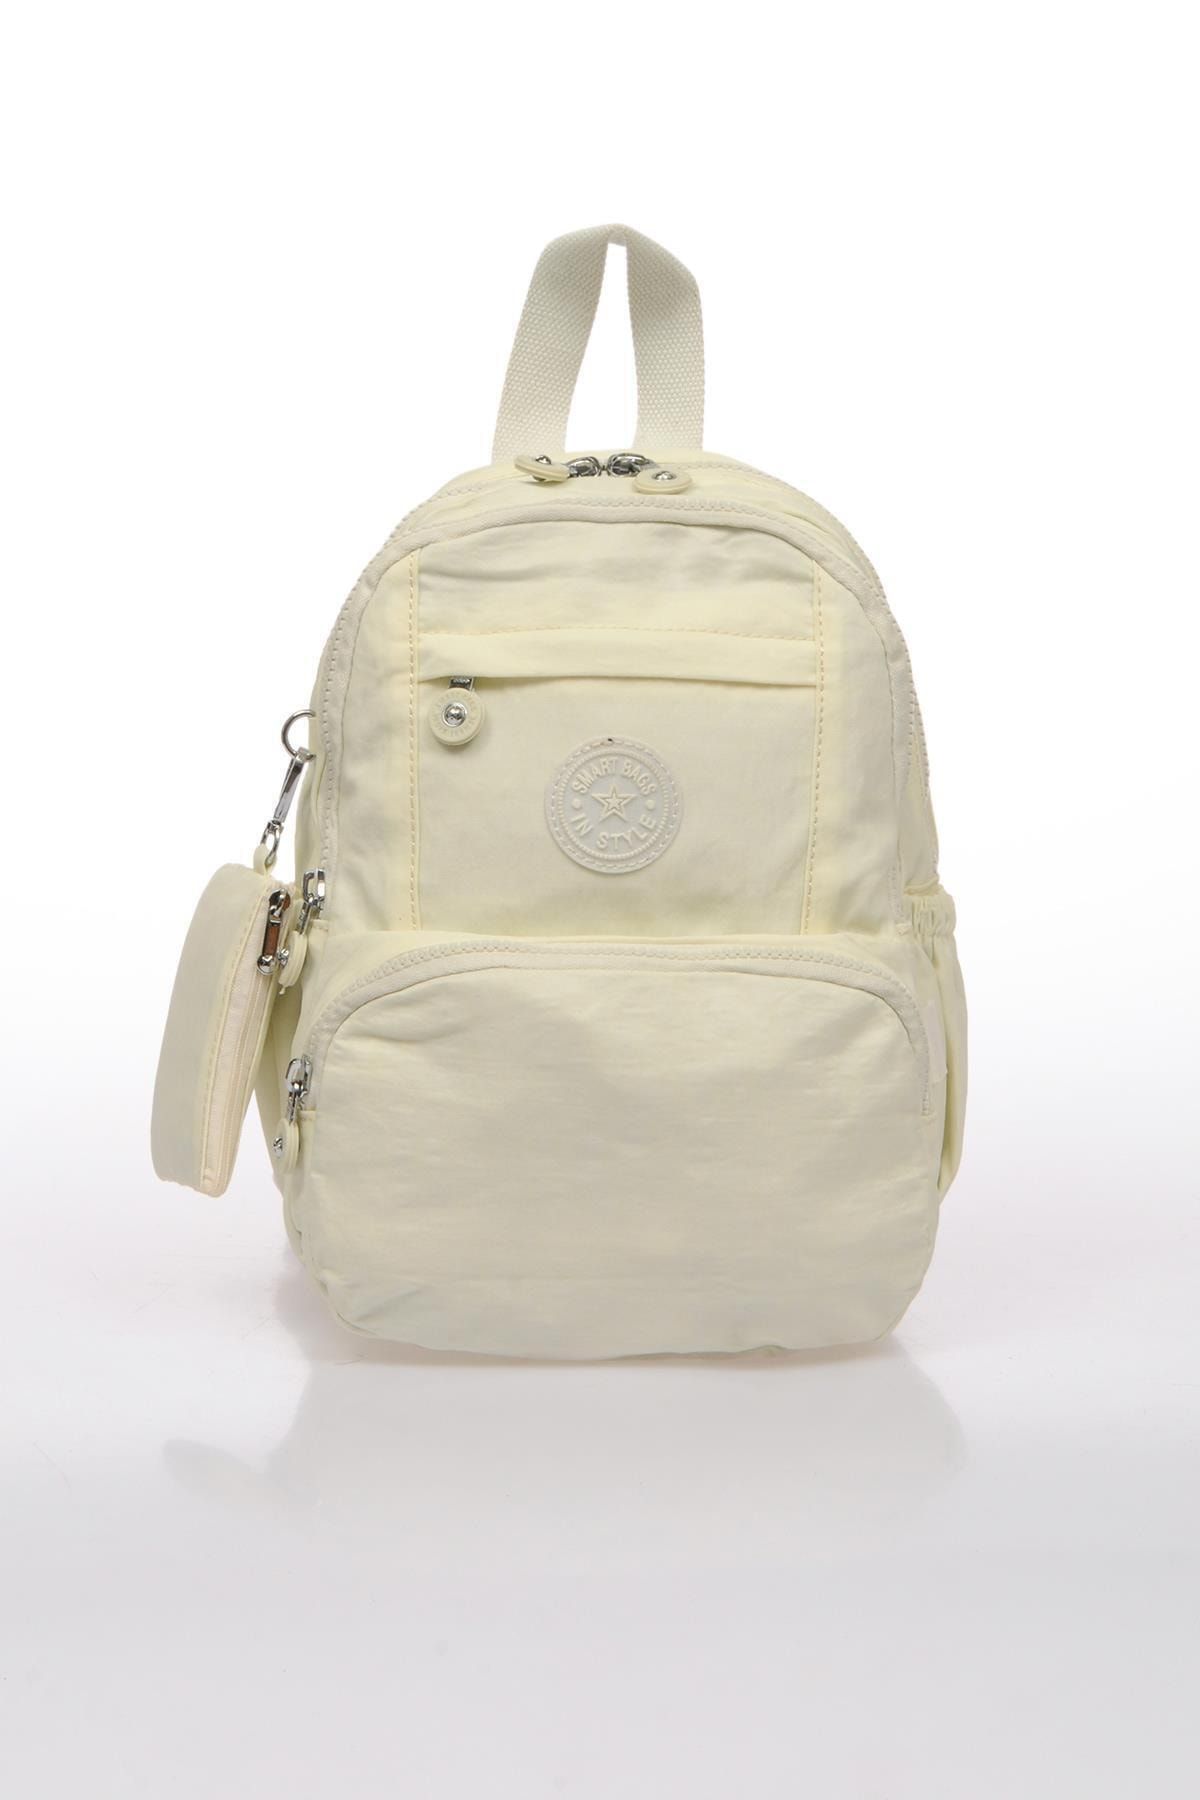 Smart Bags Smb1083-0002 Beyaz Kadın Küçük Sırt Çantası